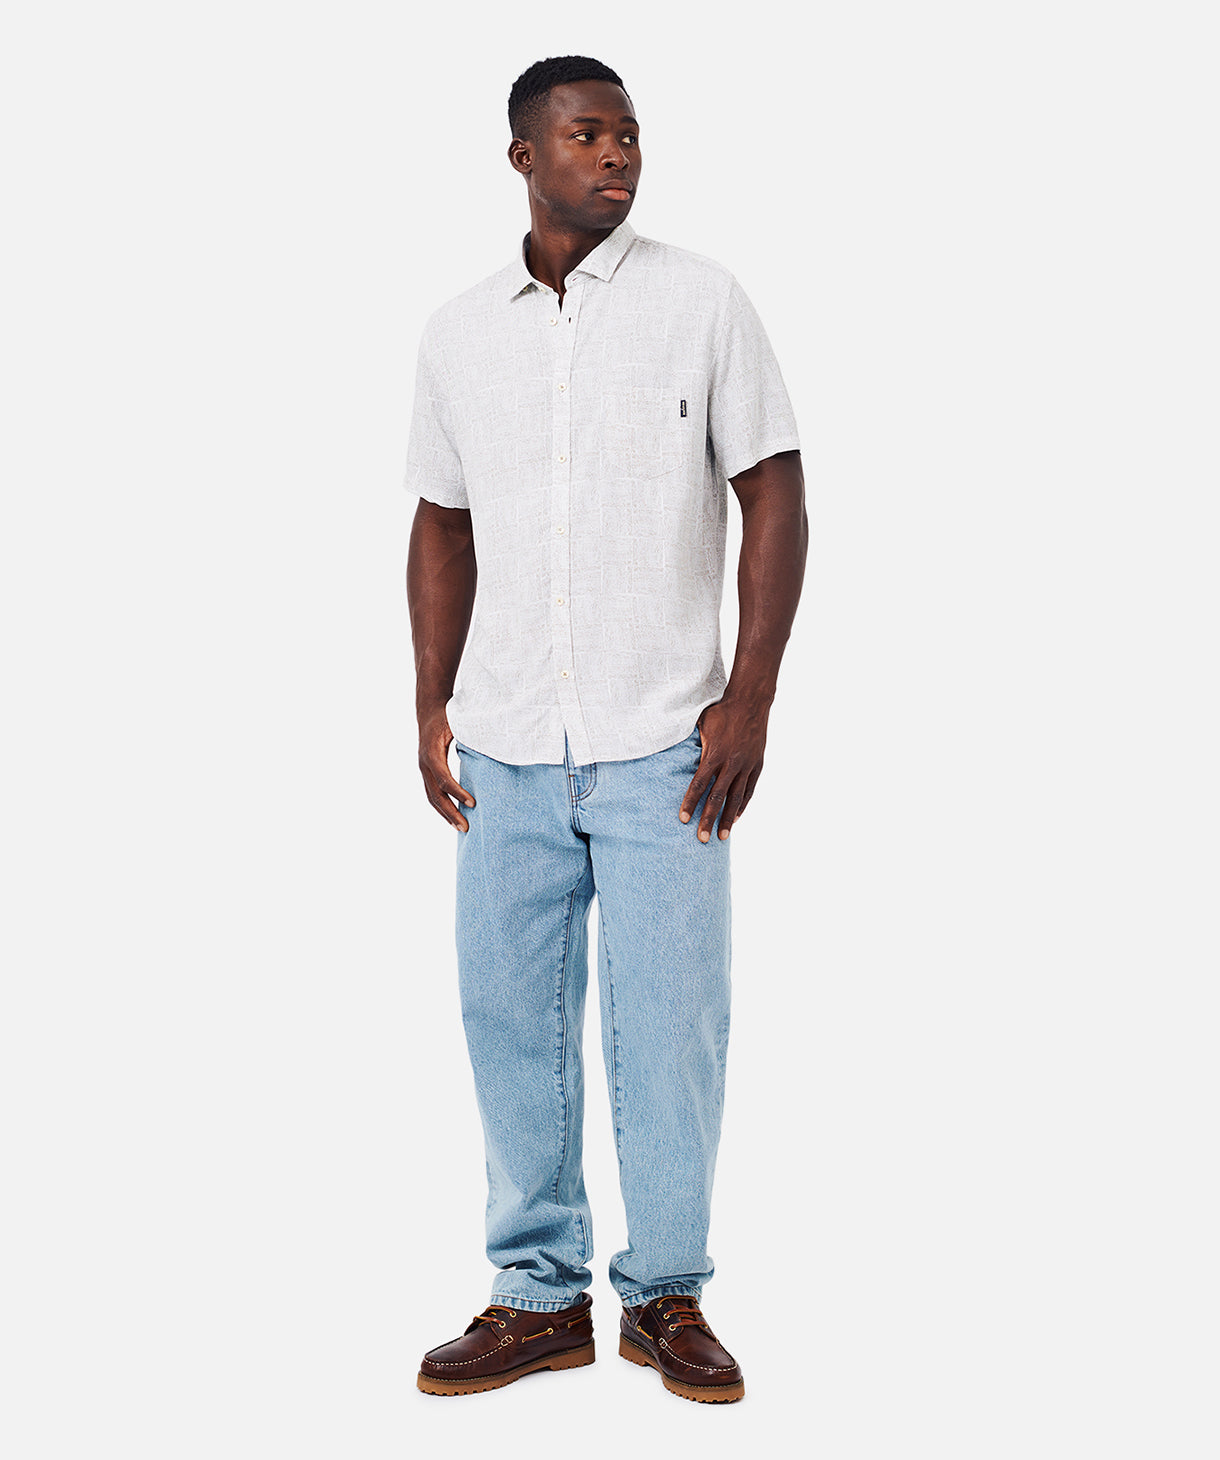 The Talavera S/s Shirt - White/Sage – Industrie Clothing Pty Ltd